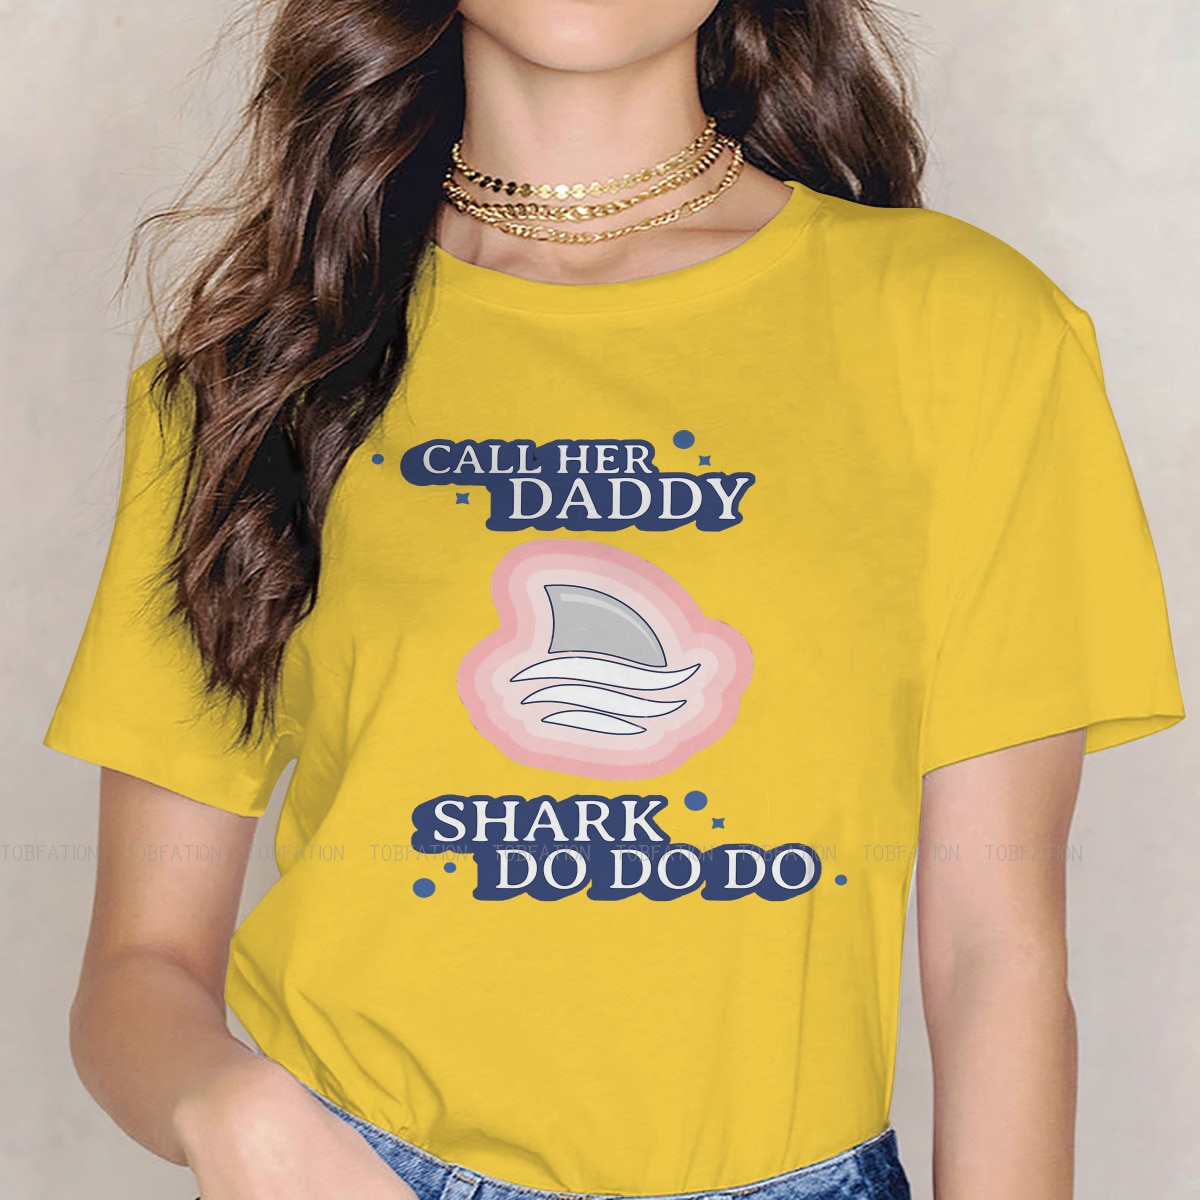 Aggretsuko Anime TShirt for Woman Girl Call Her Daddy Funny Humor Casual Sweatshirts T Shirt Novelty - Purpled Shop